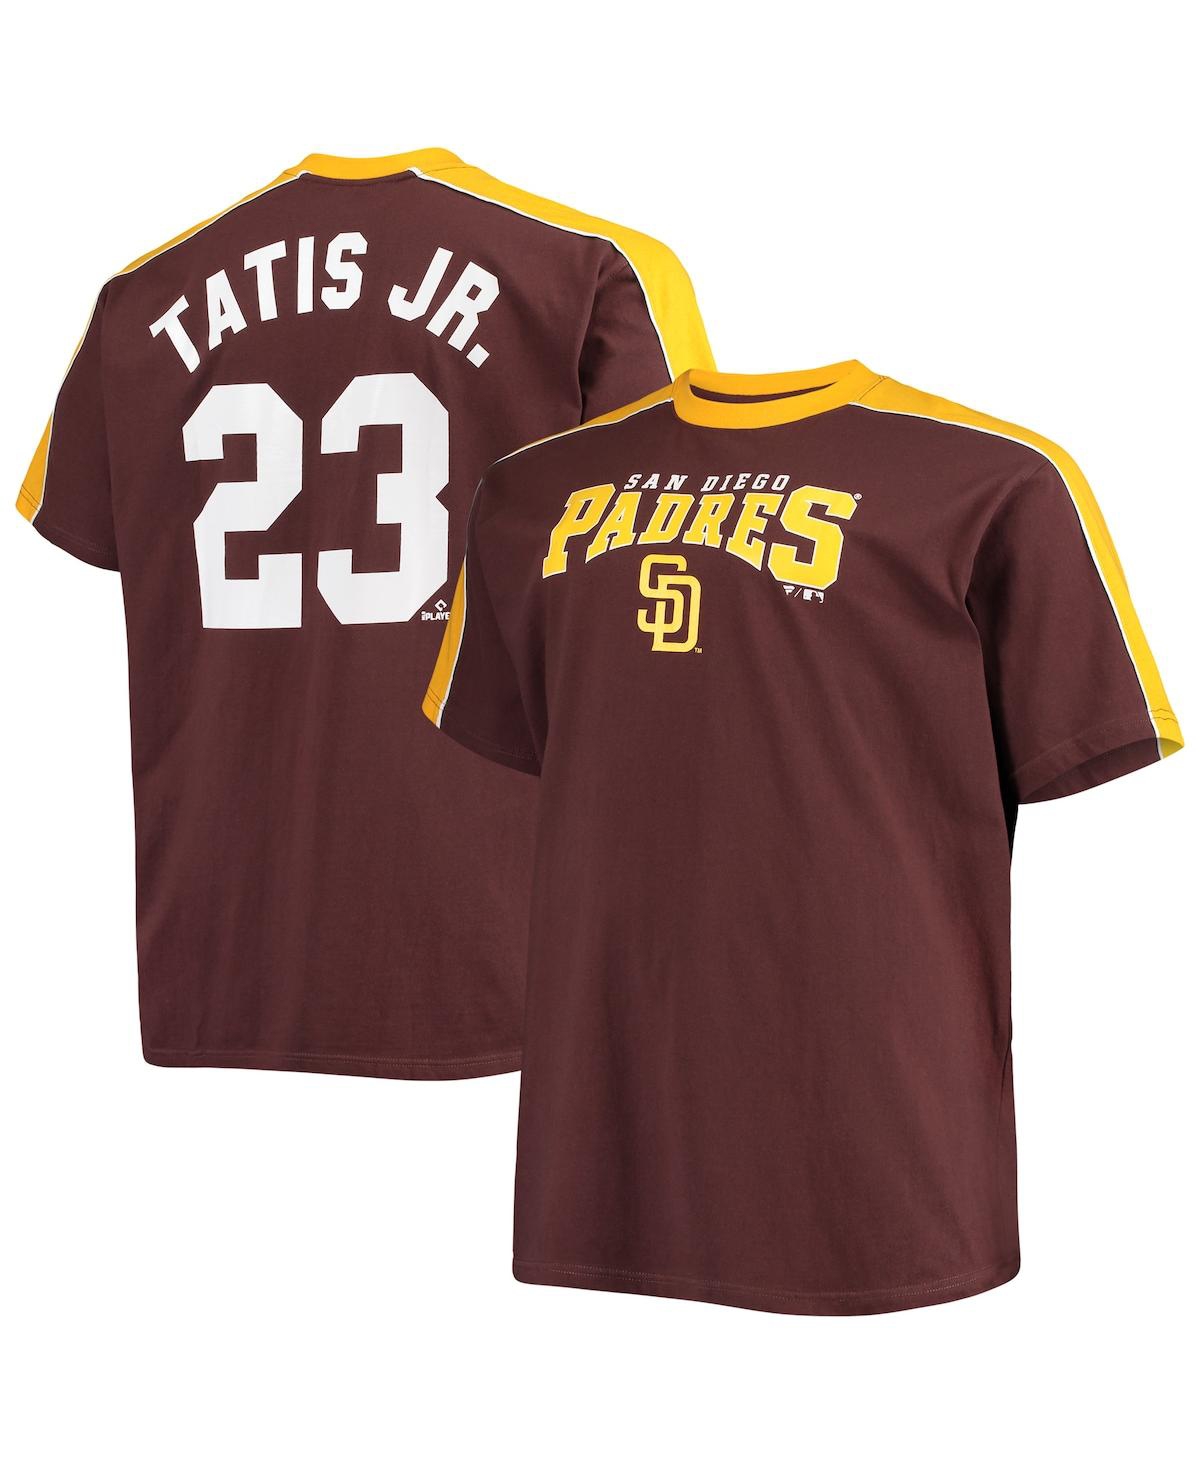 Men's Fernando Tatis Jr. Brown and Gold San Diego Padres Big and Tall Fashion Piping Player T-shirt - Brown, Gold